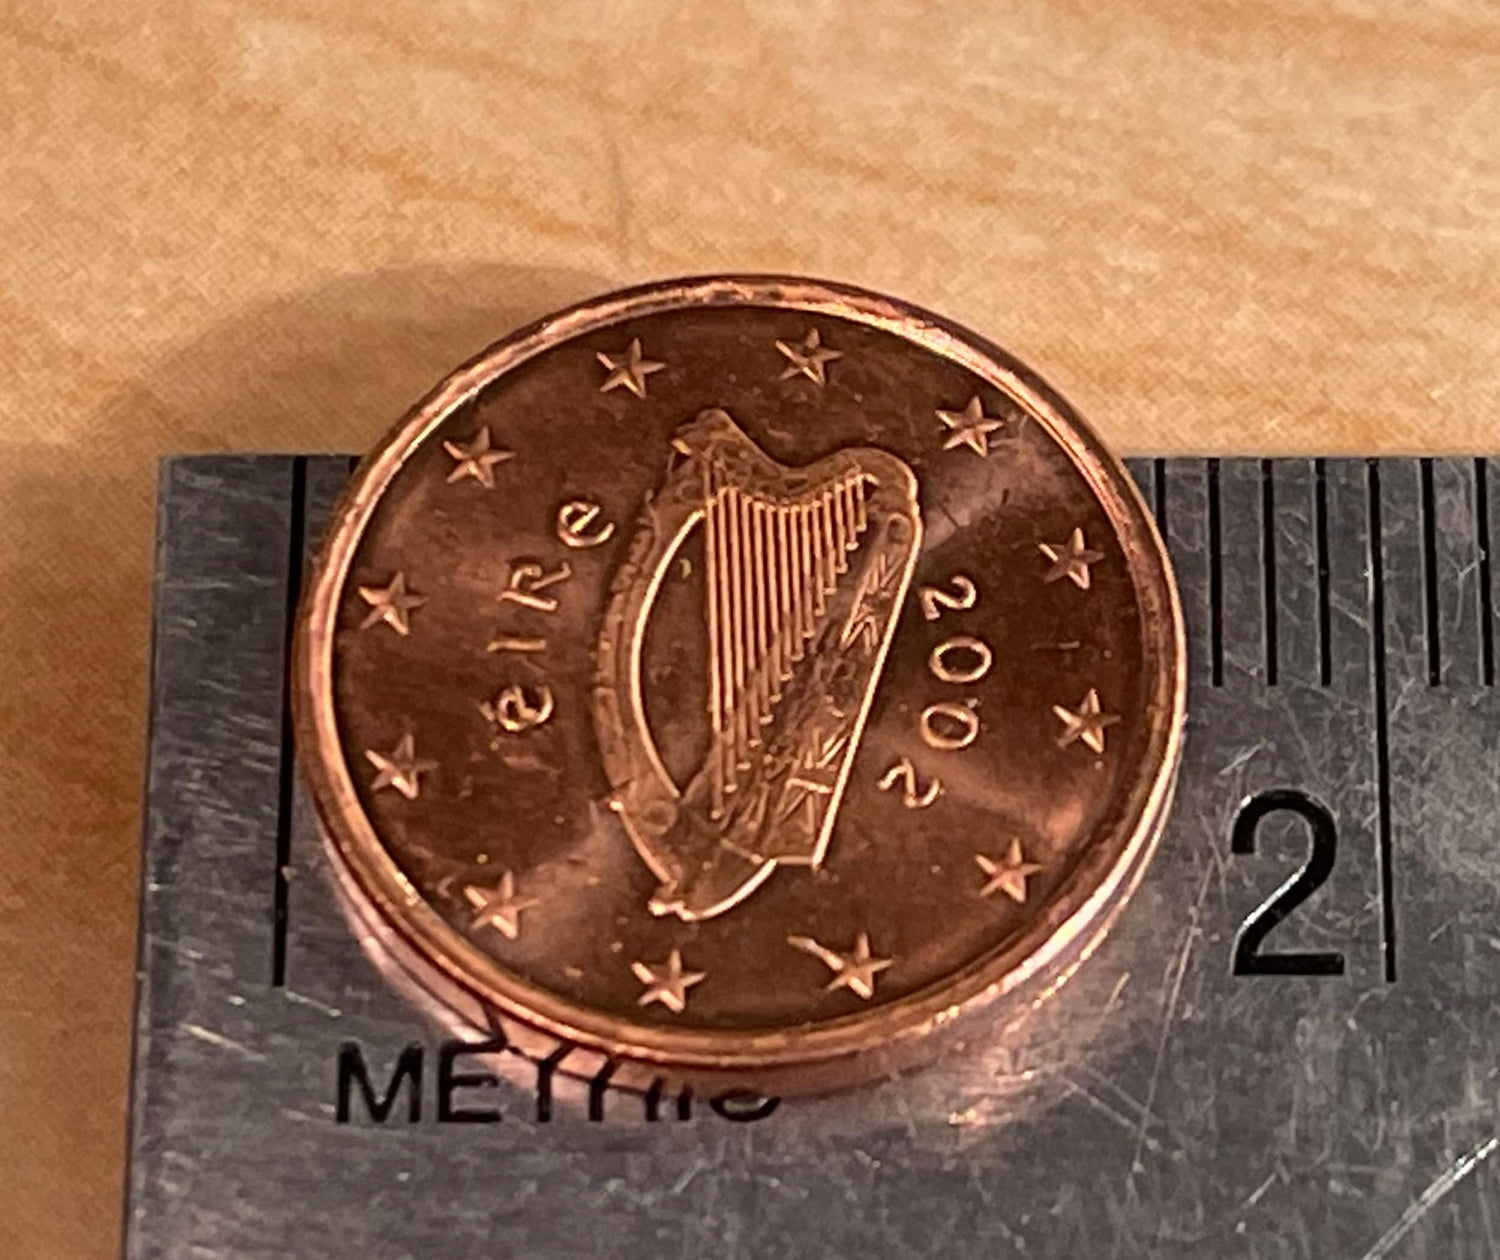 Irish Harp 1 Euro Cent Ireland Authentic Coin Money for Jewelry and Craft Making